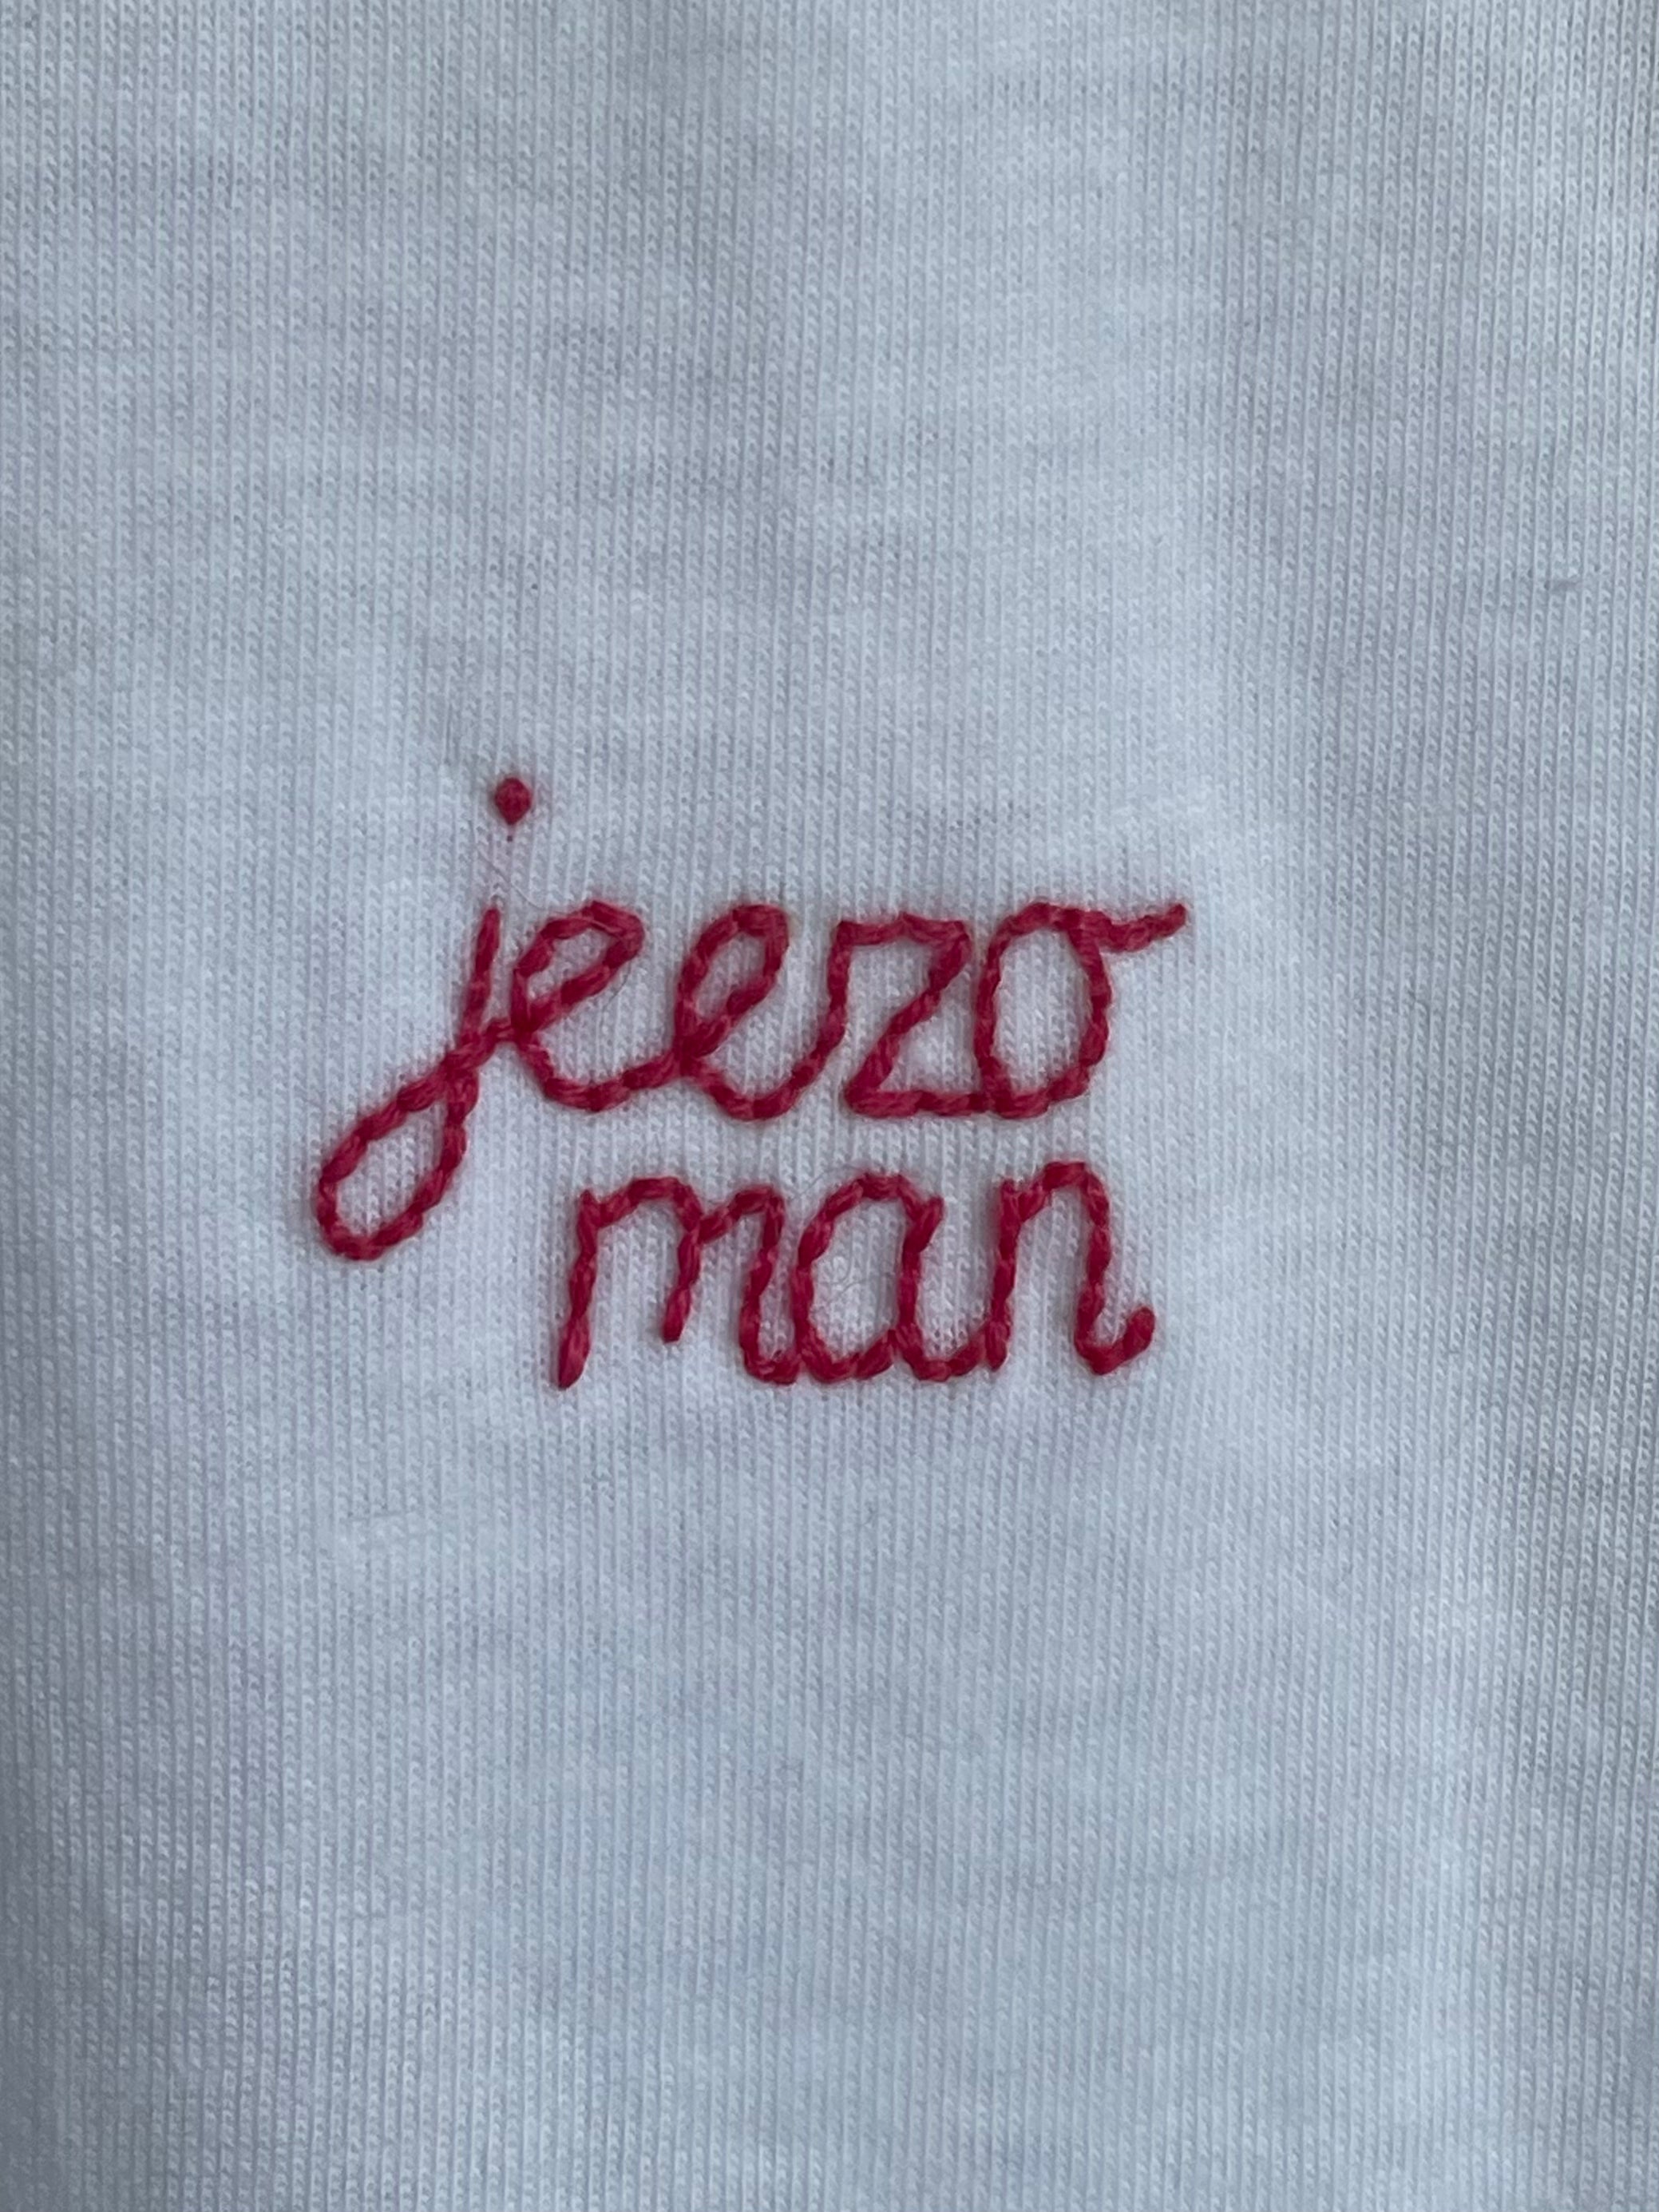 JEEZO MAN - T SHIRT